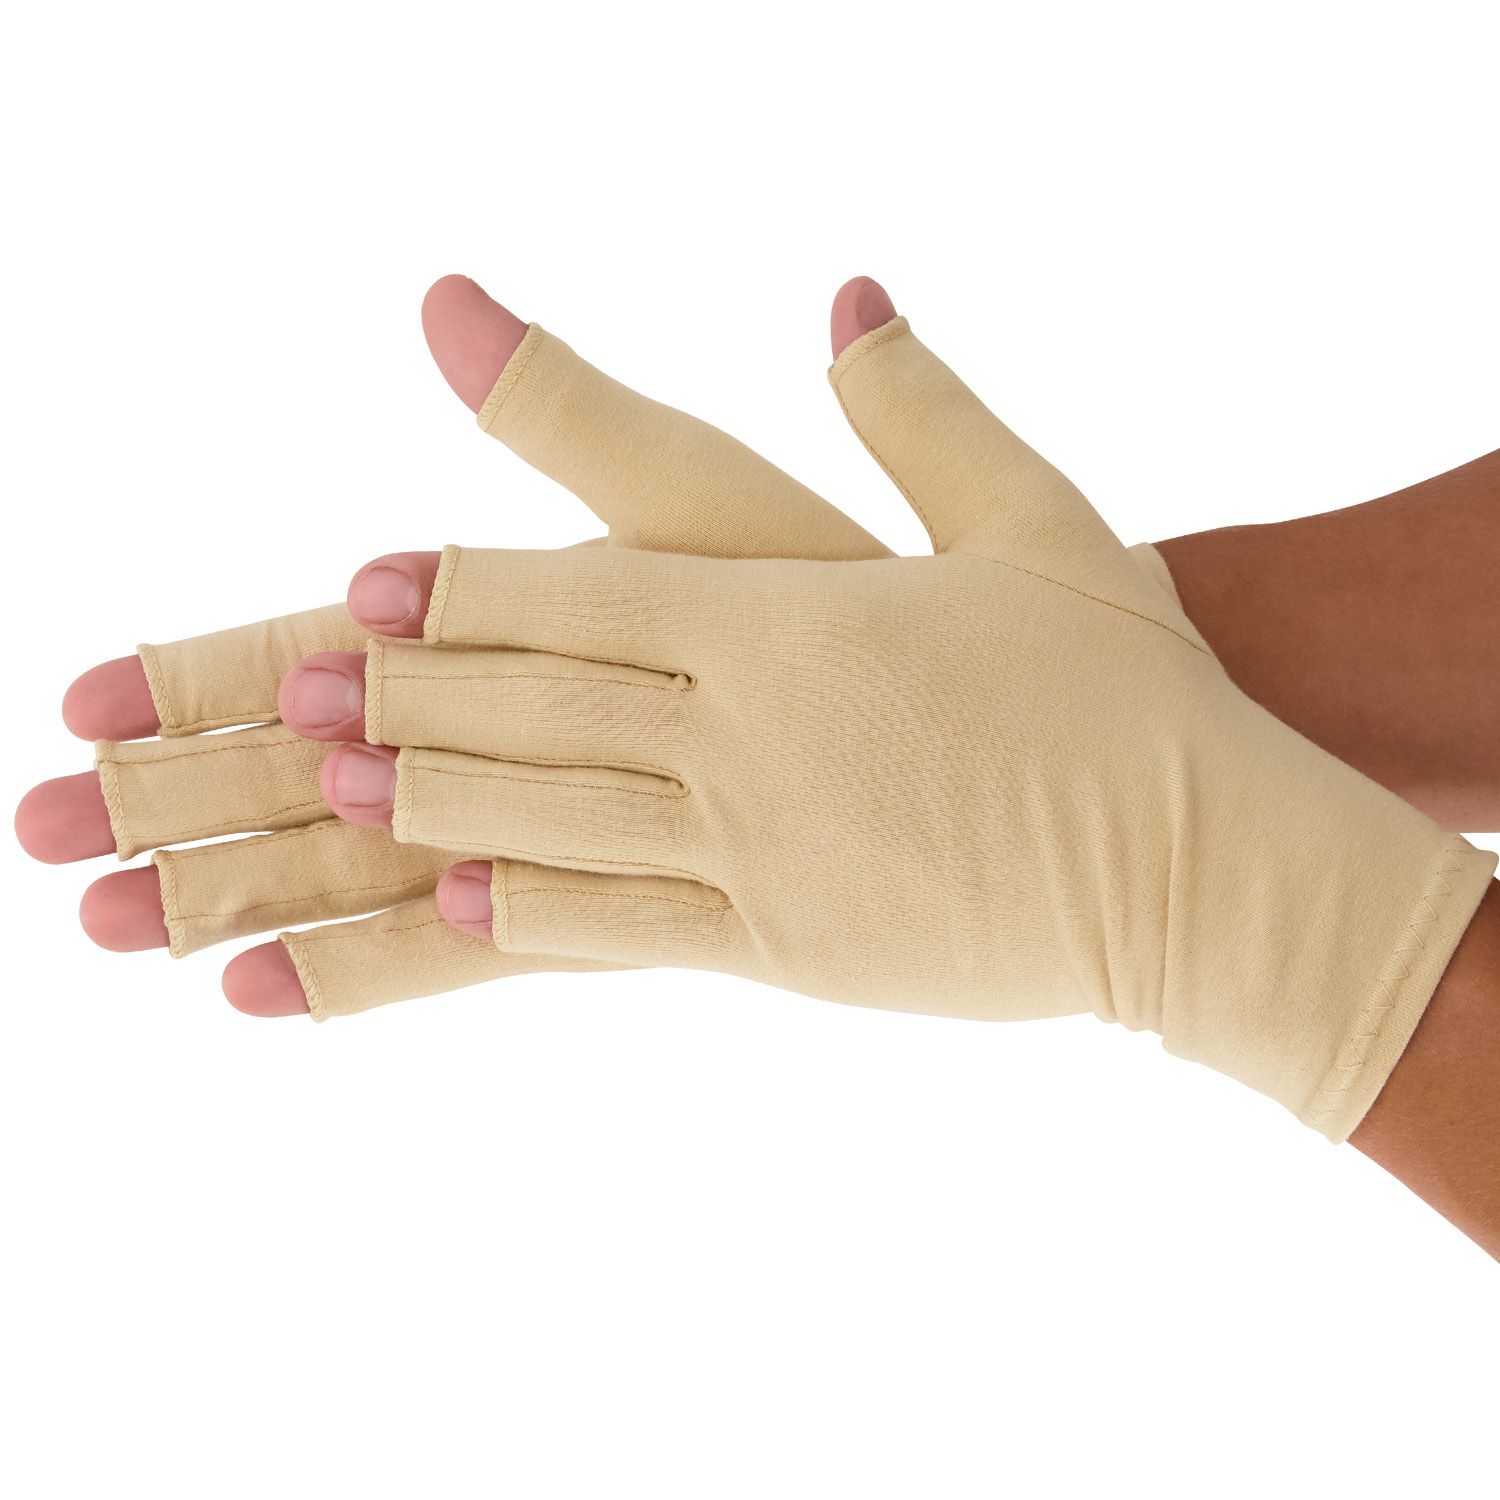 dunimed rheumatoid arthritis osteoarthritis gloves product explanation